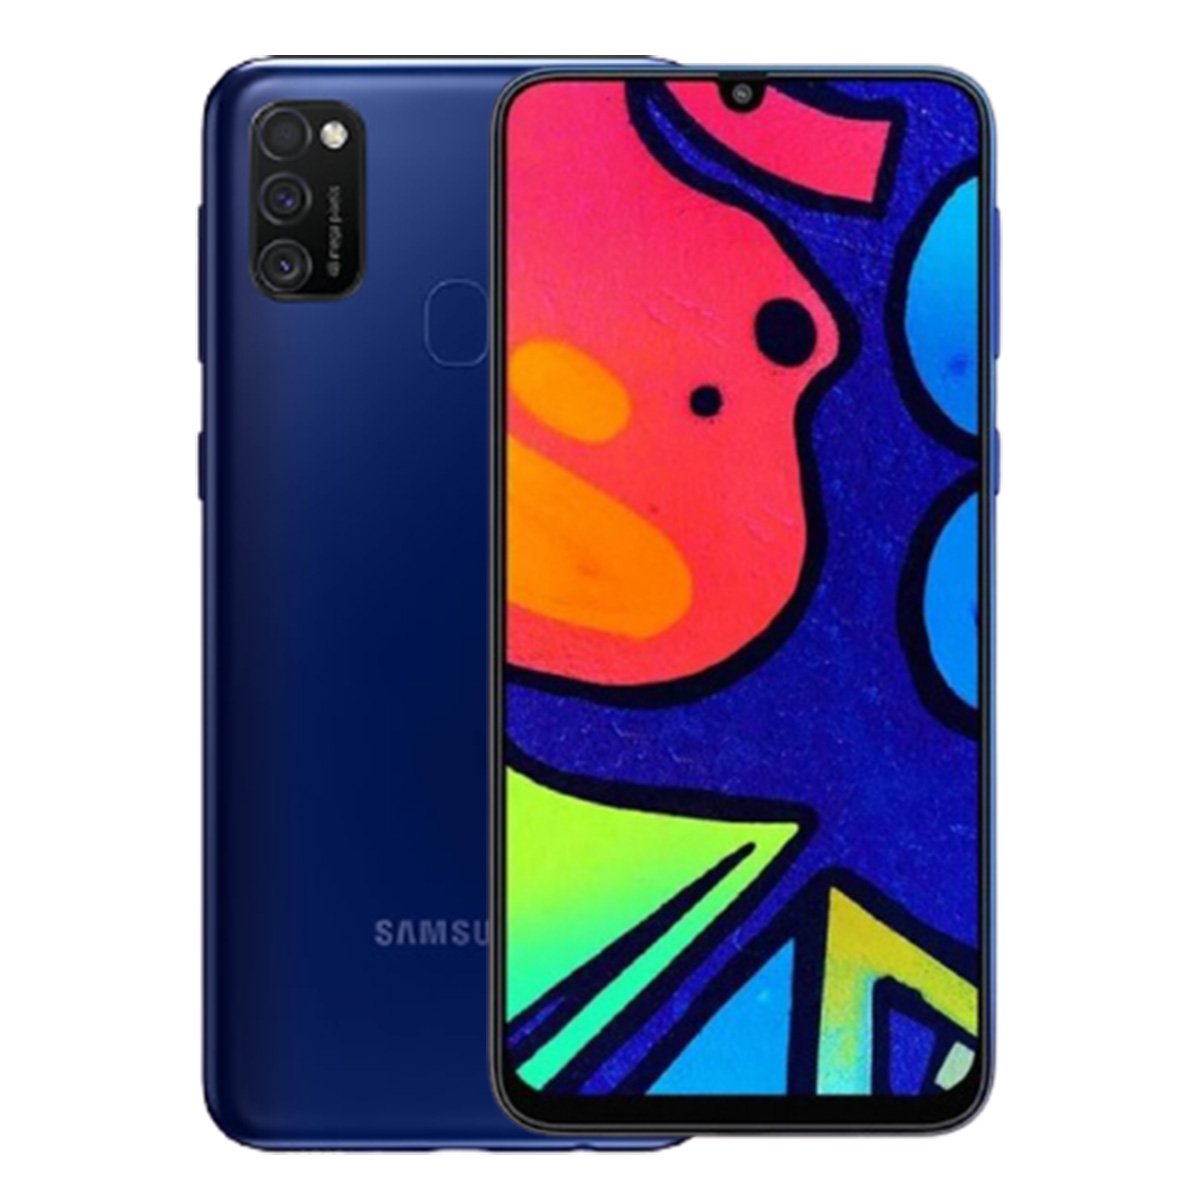  Samsung Galaxy M21s Price